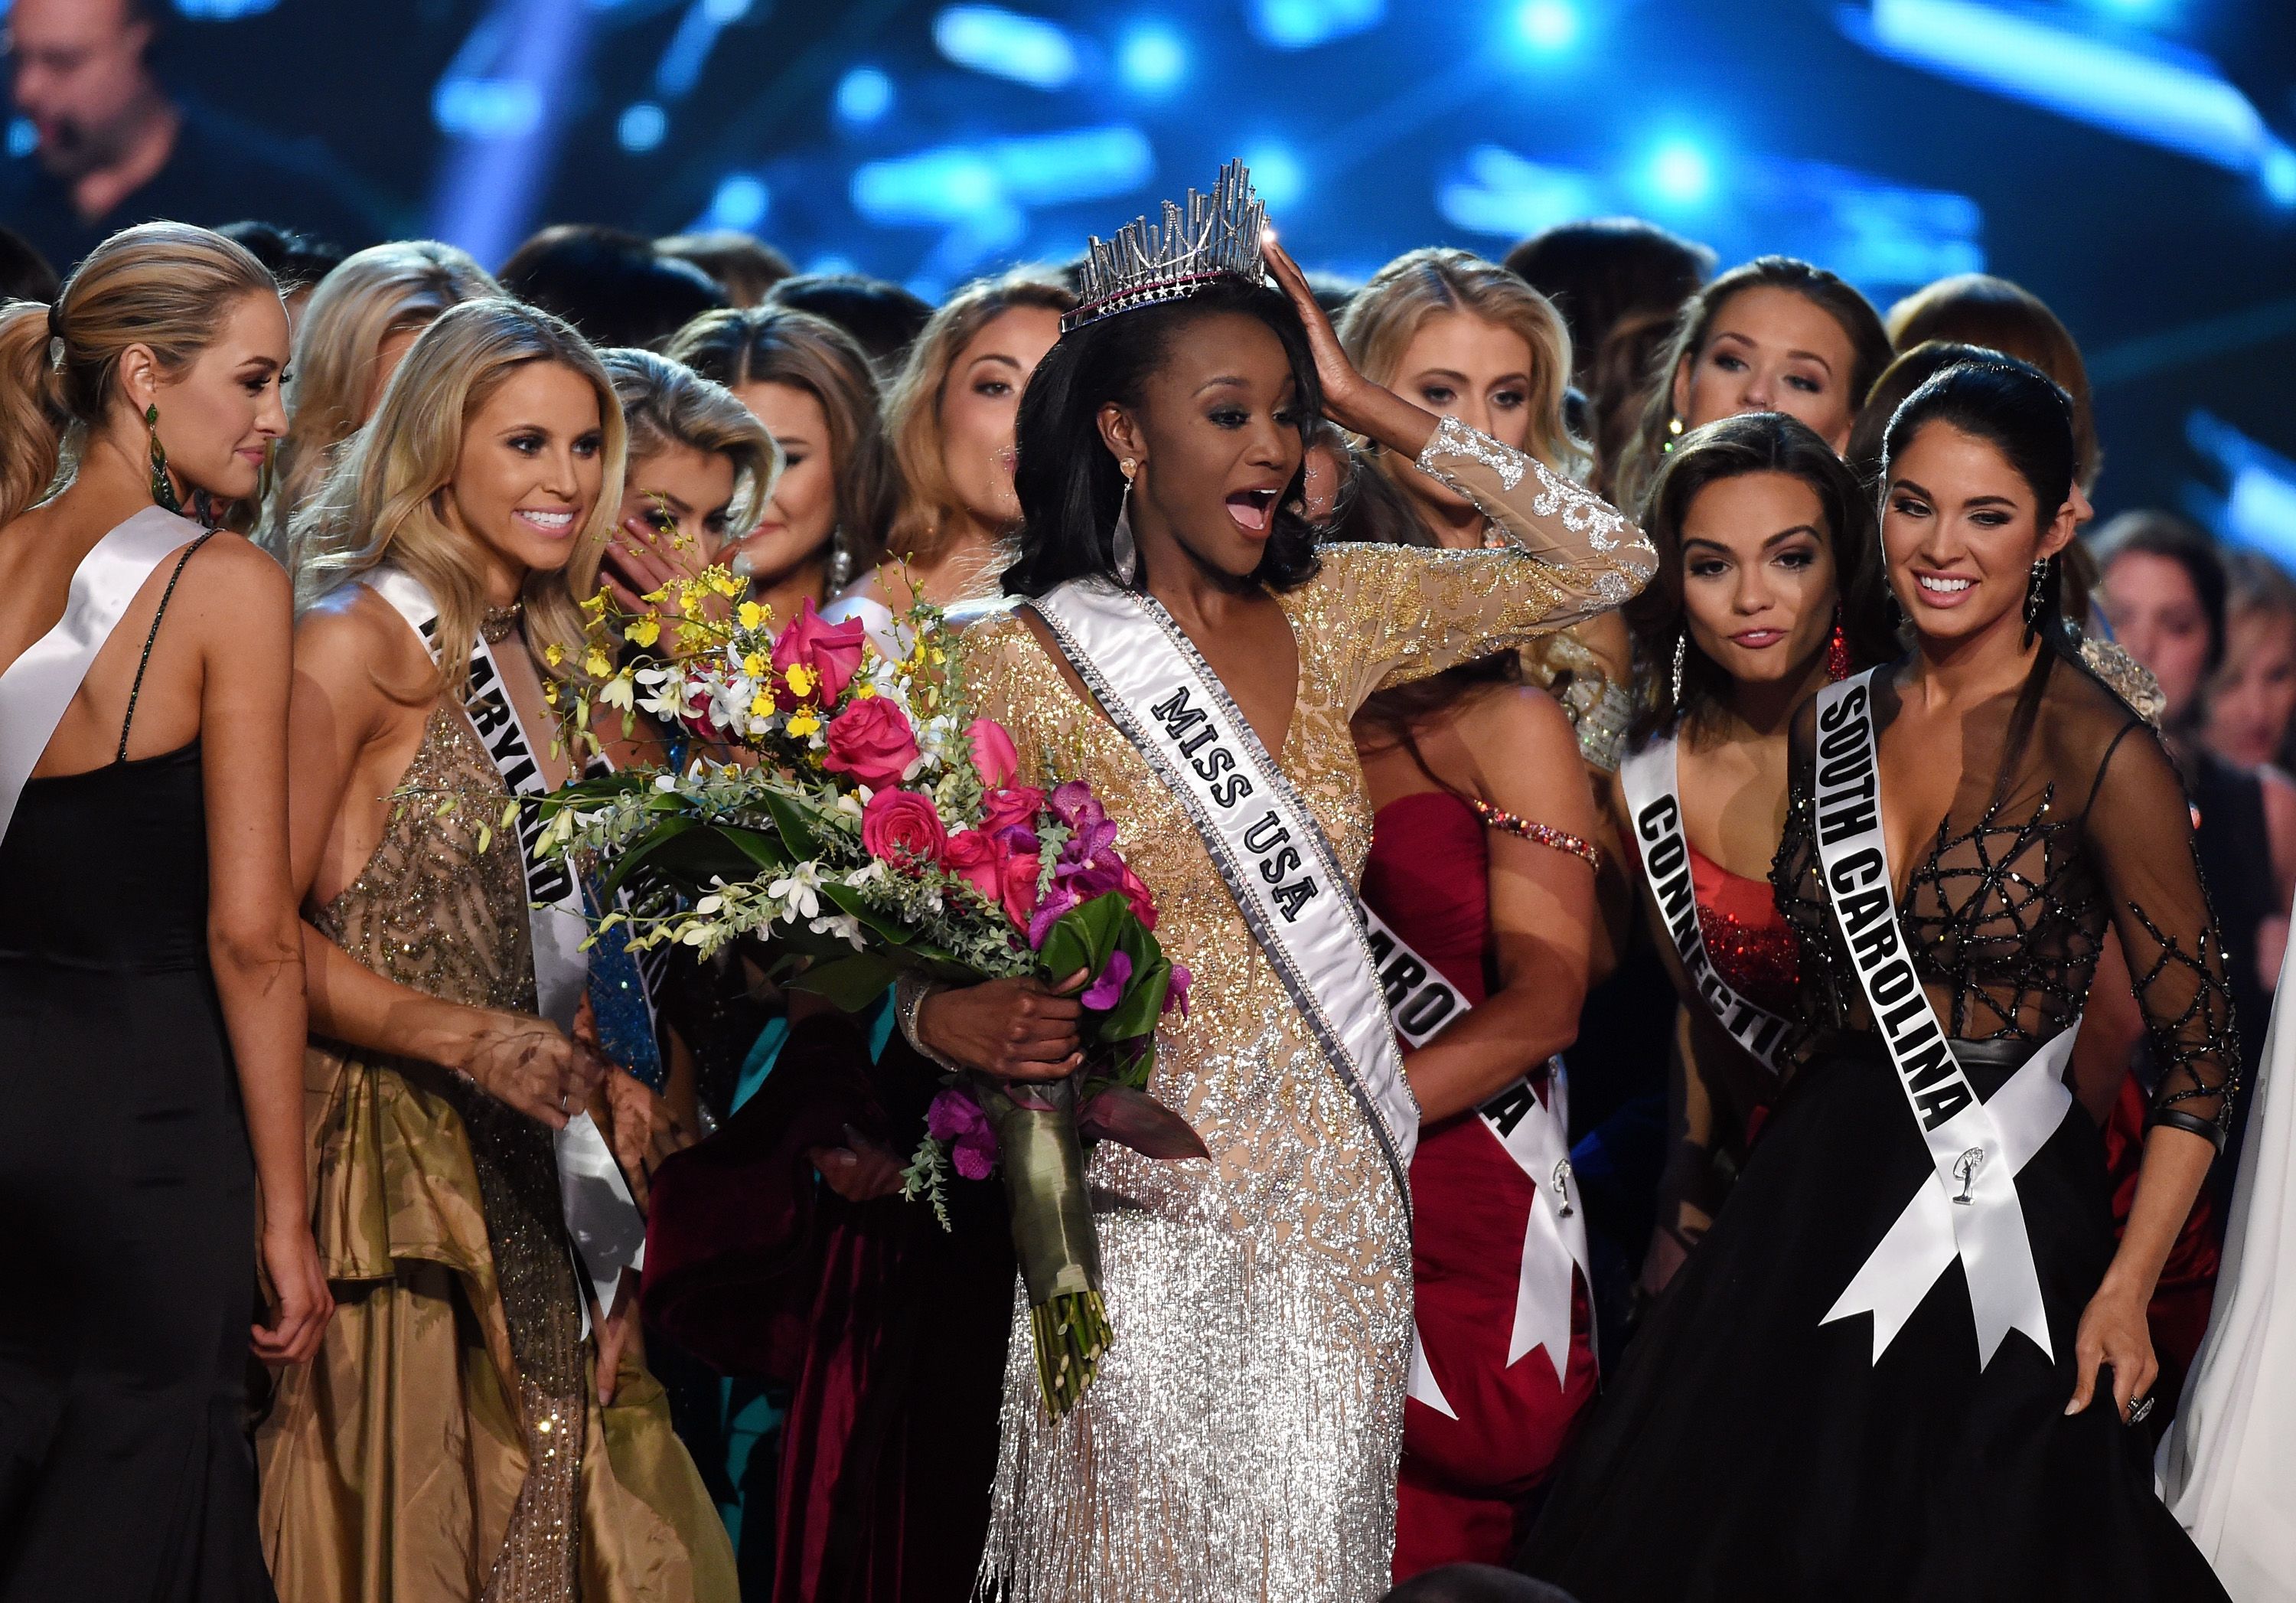 Junior Nudist Pageant Miss Universe - Deshauna Barber crowned Miss USA 2016 | CNN